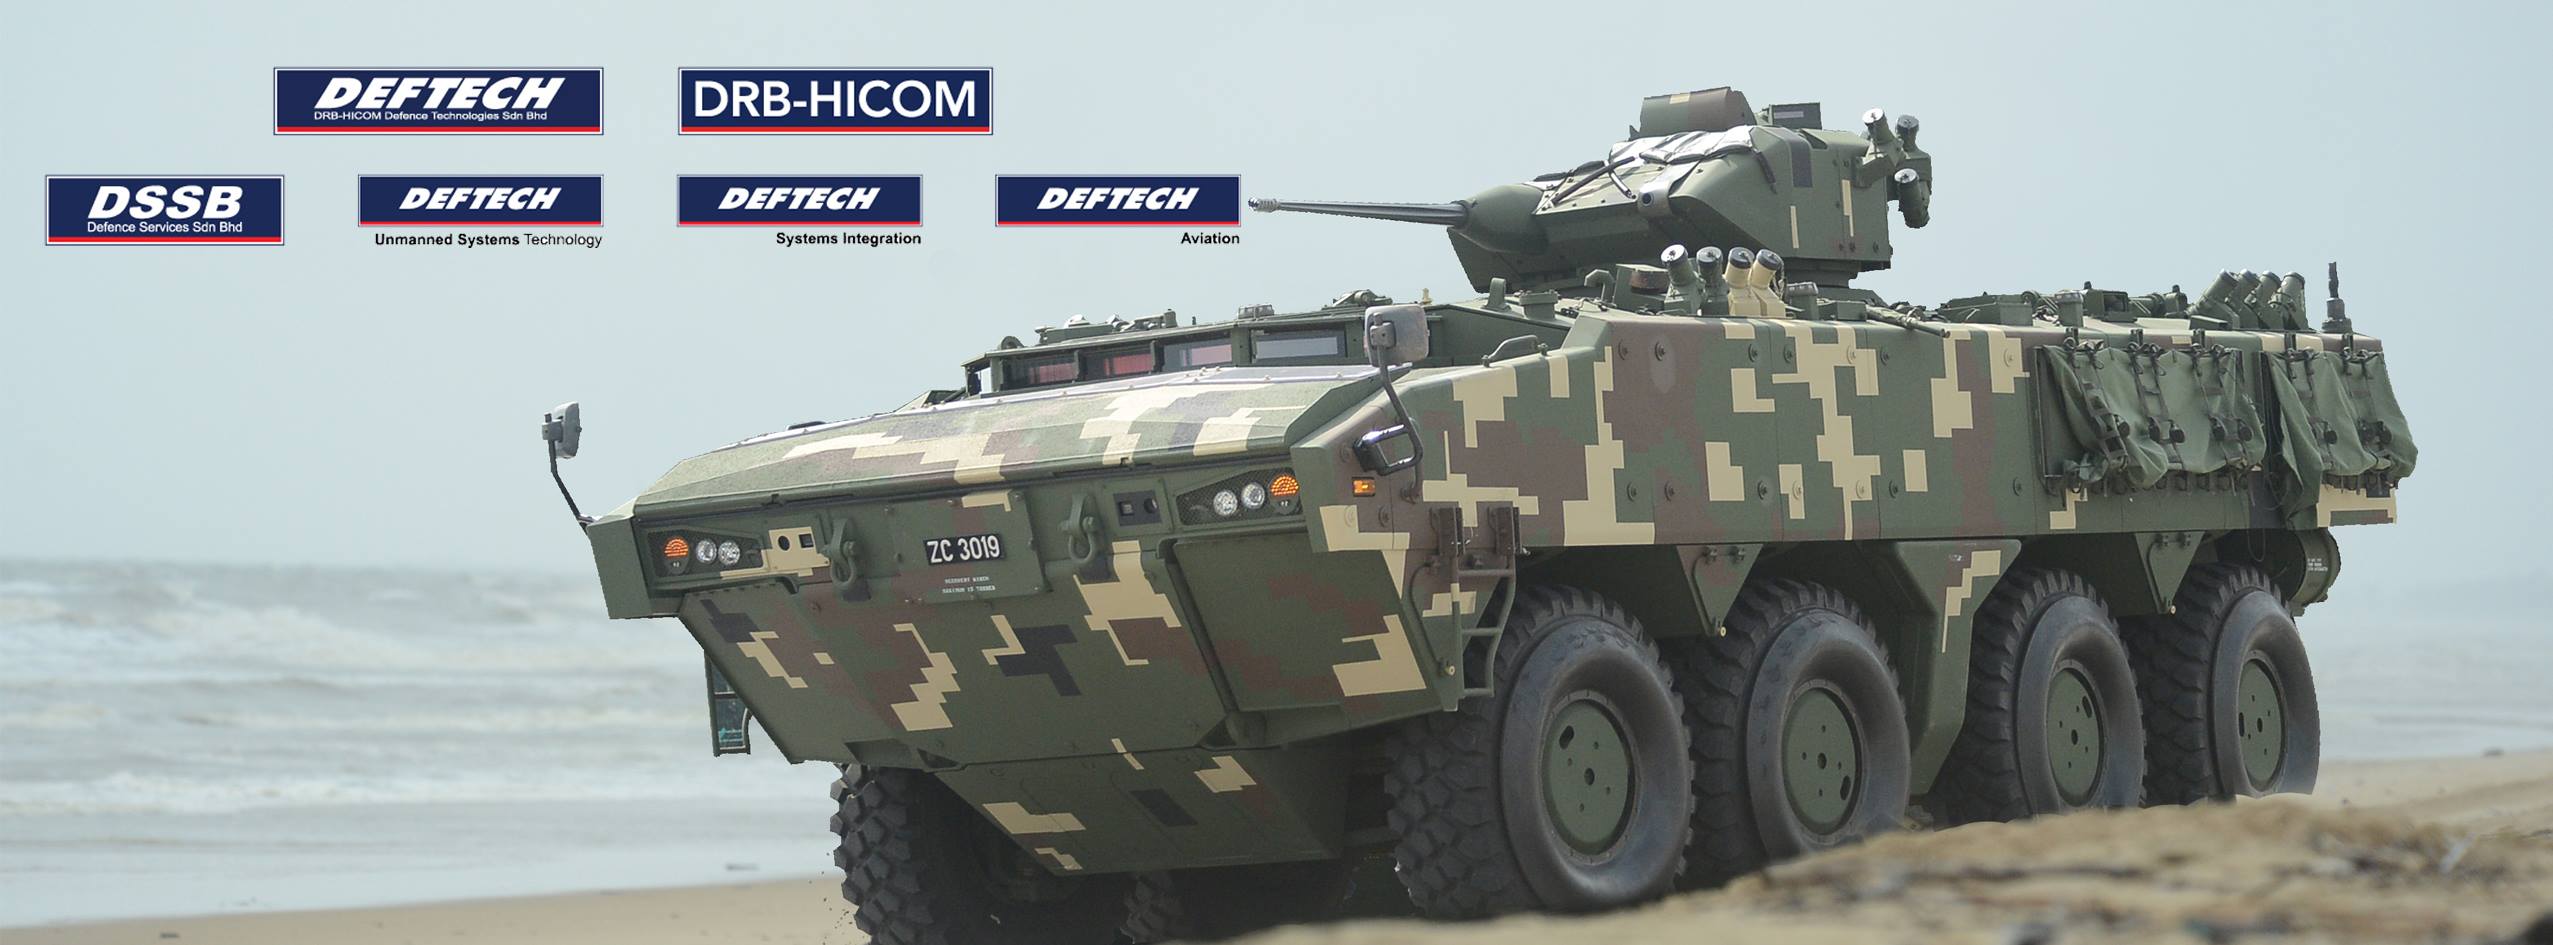 DEFTECH – DRB-HICOM Defence Technologies Sdn. Bhd